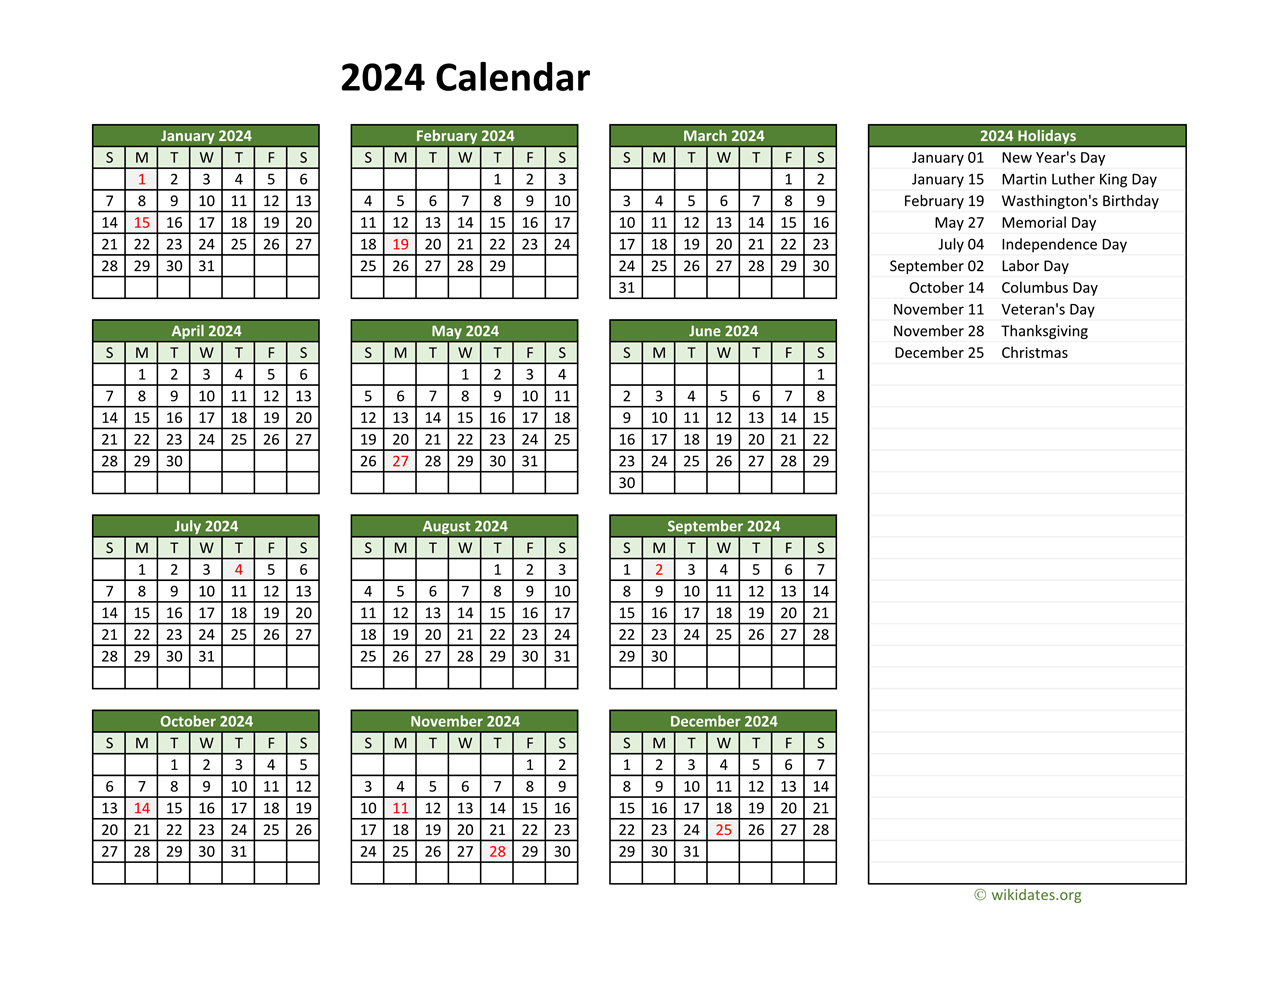 Printable 2024 Calendar With Federal Holidays | Wikidates for 2024 Federal Holiday Calendar Printable